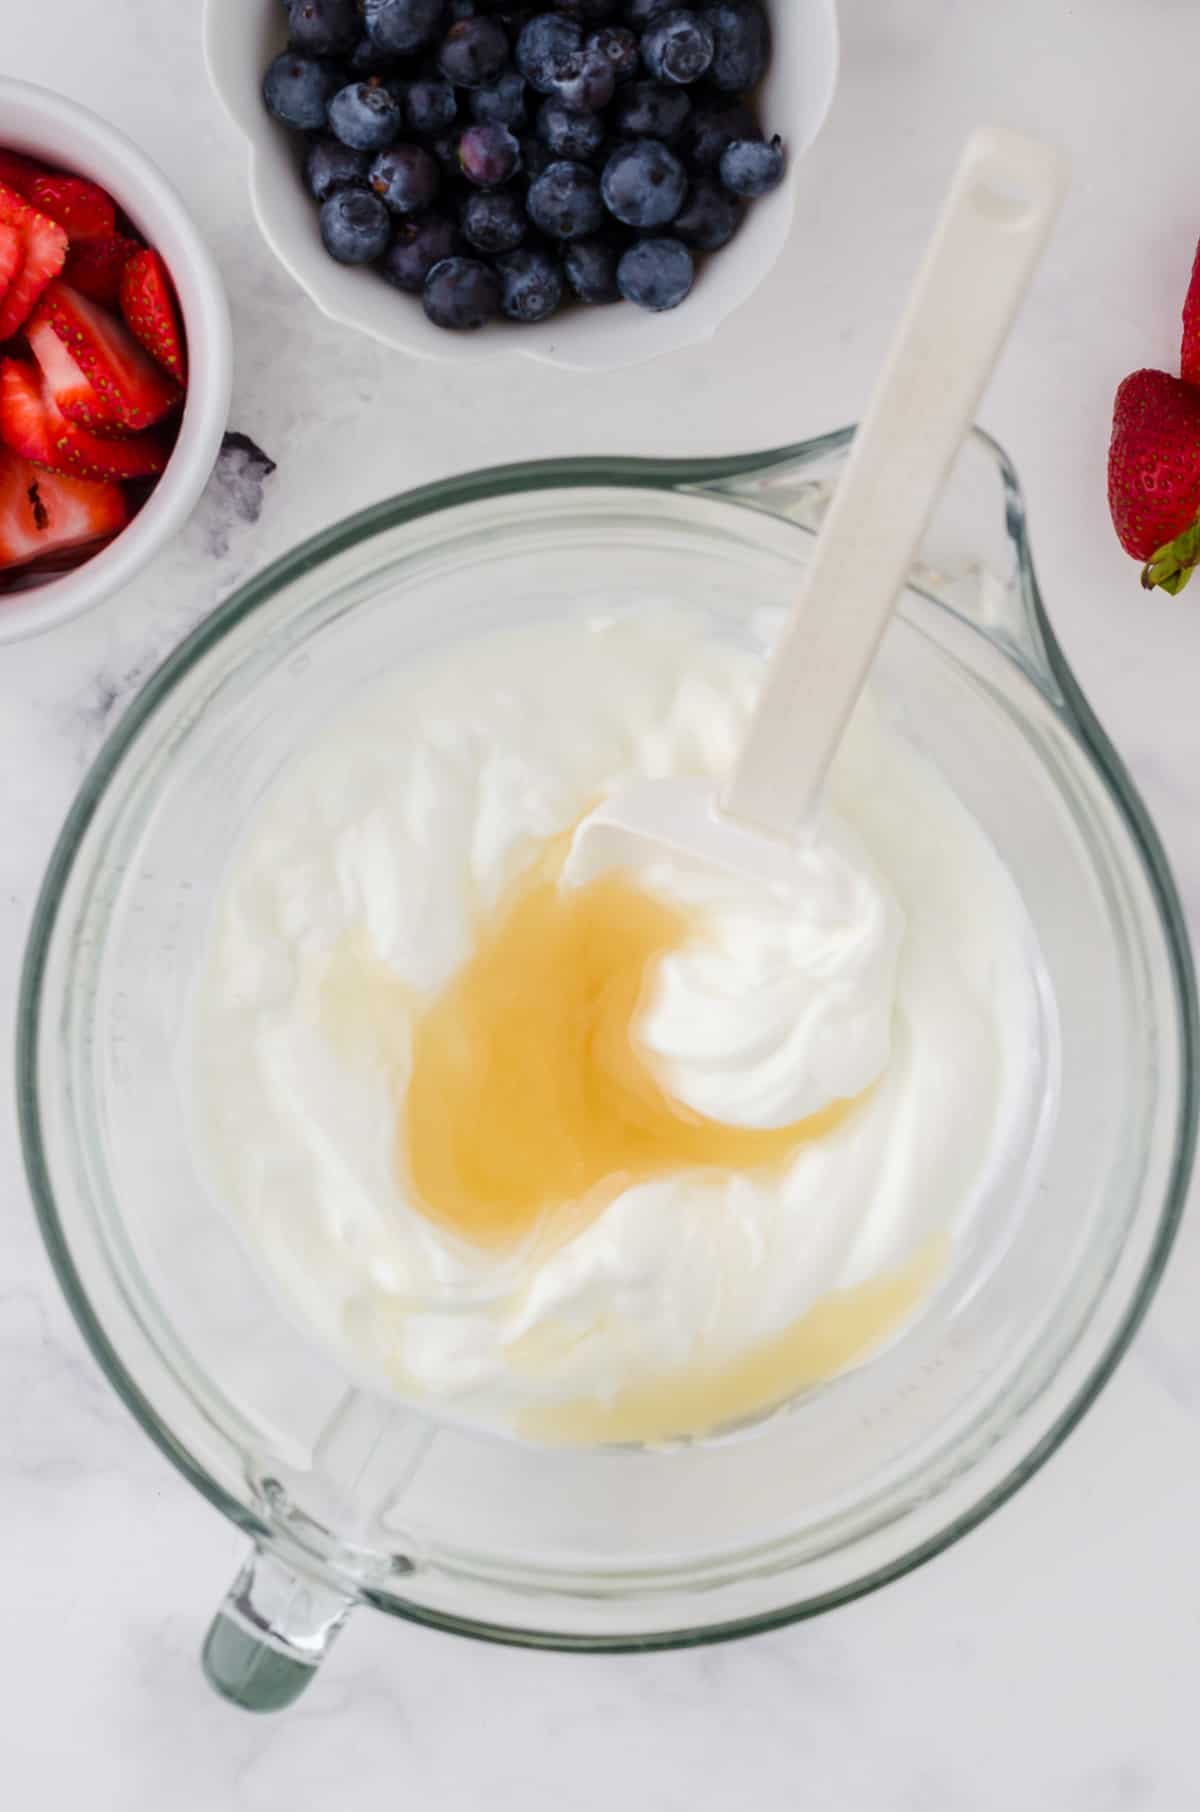 Stir together the greek yogurt and honey until well mixed.